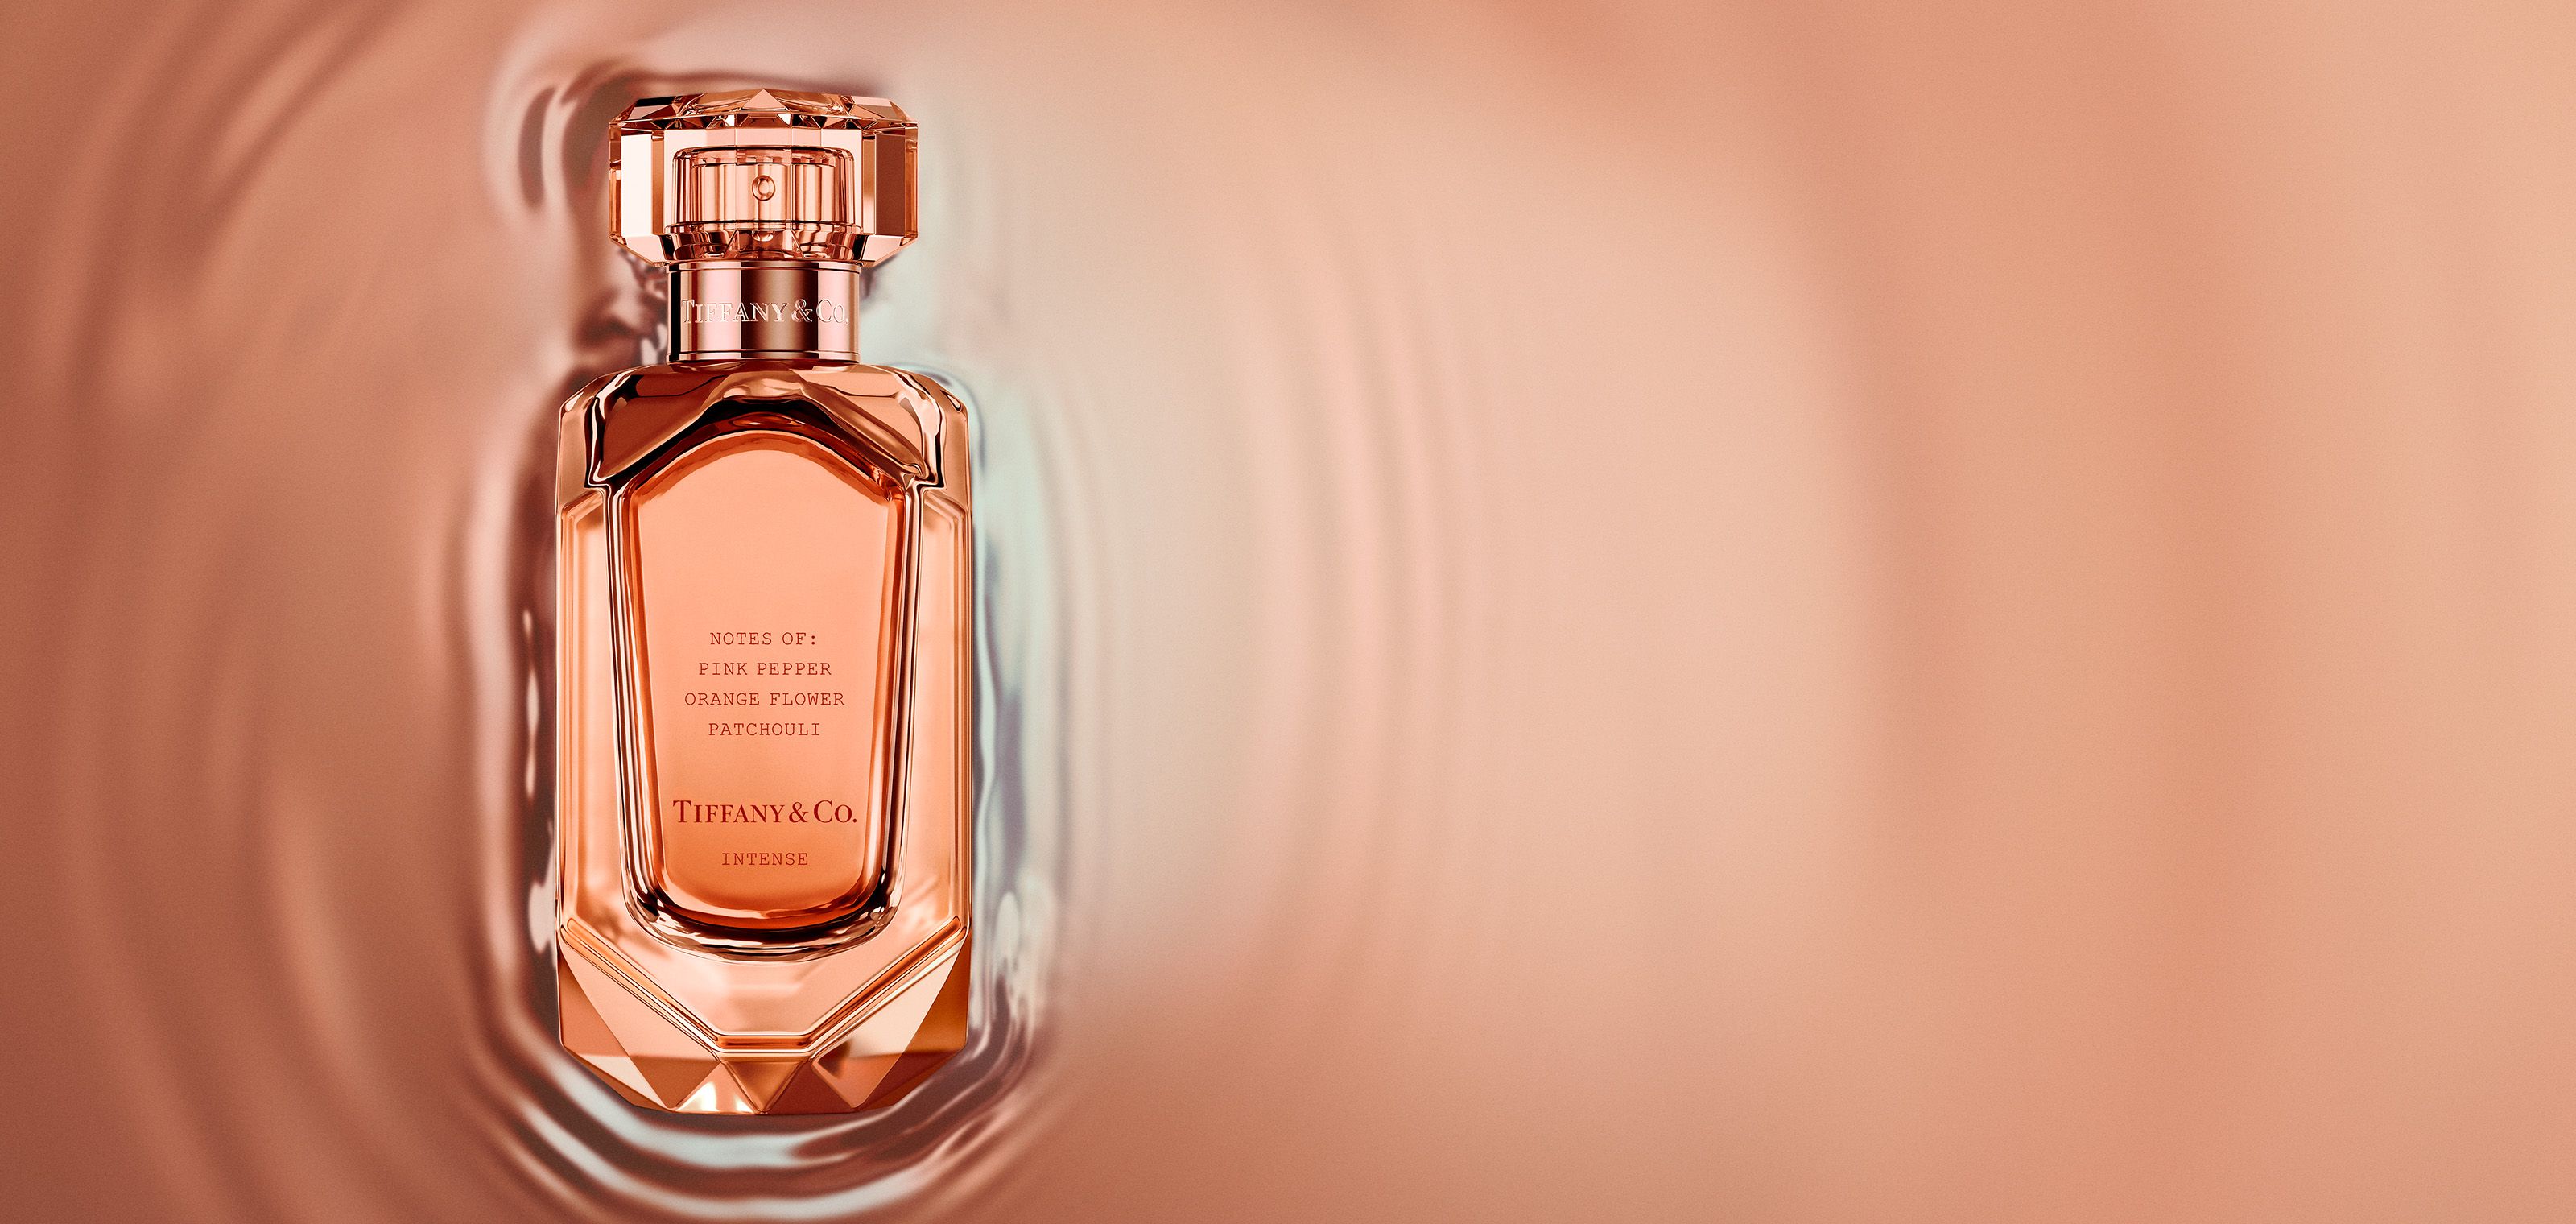 Tiffany & Love 系列男士香水，1.6 盎司。 | Tiffany & Co.